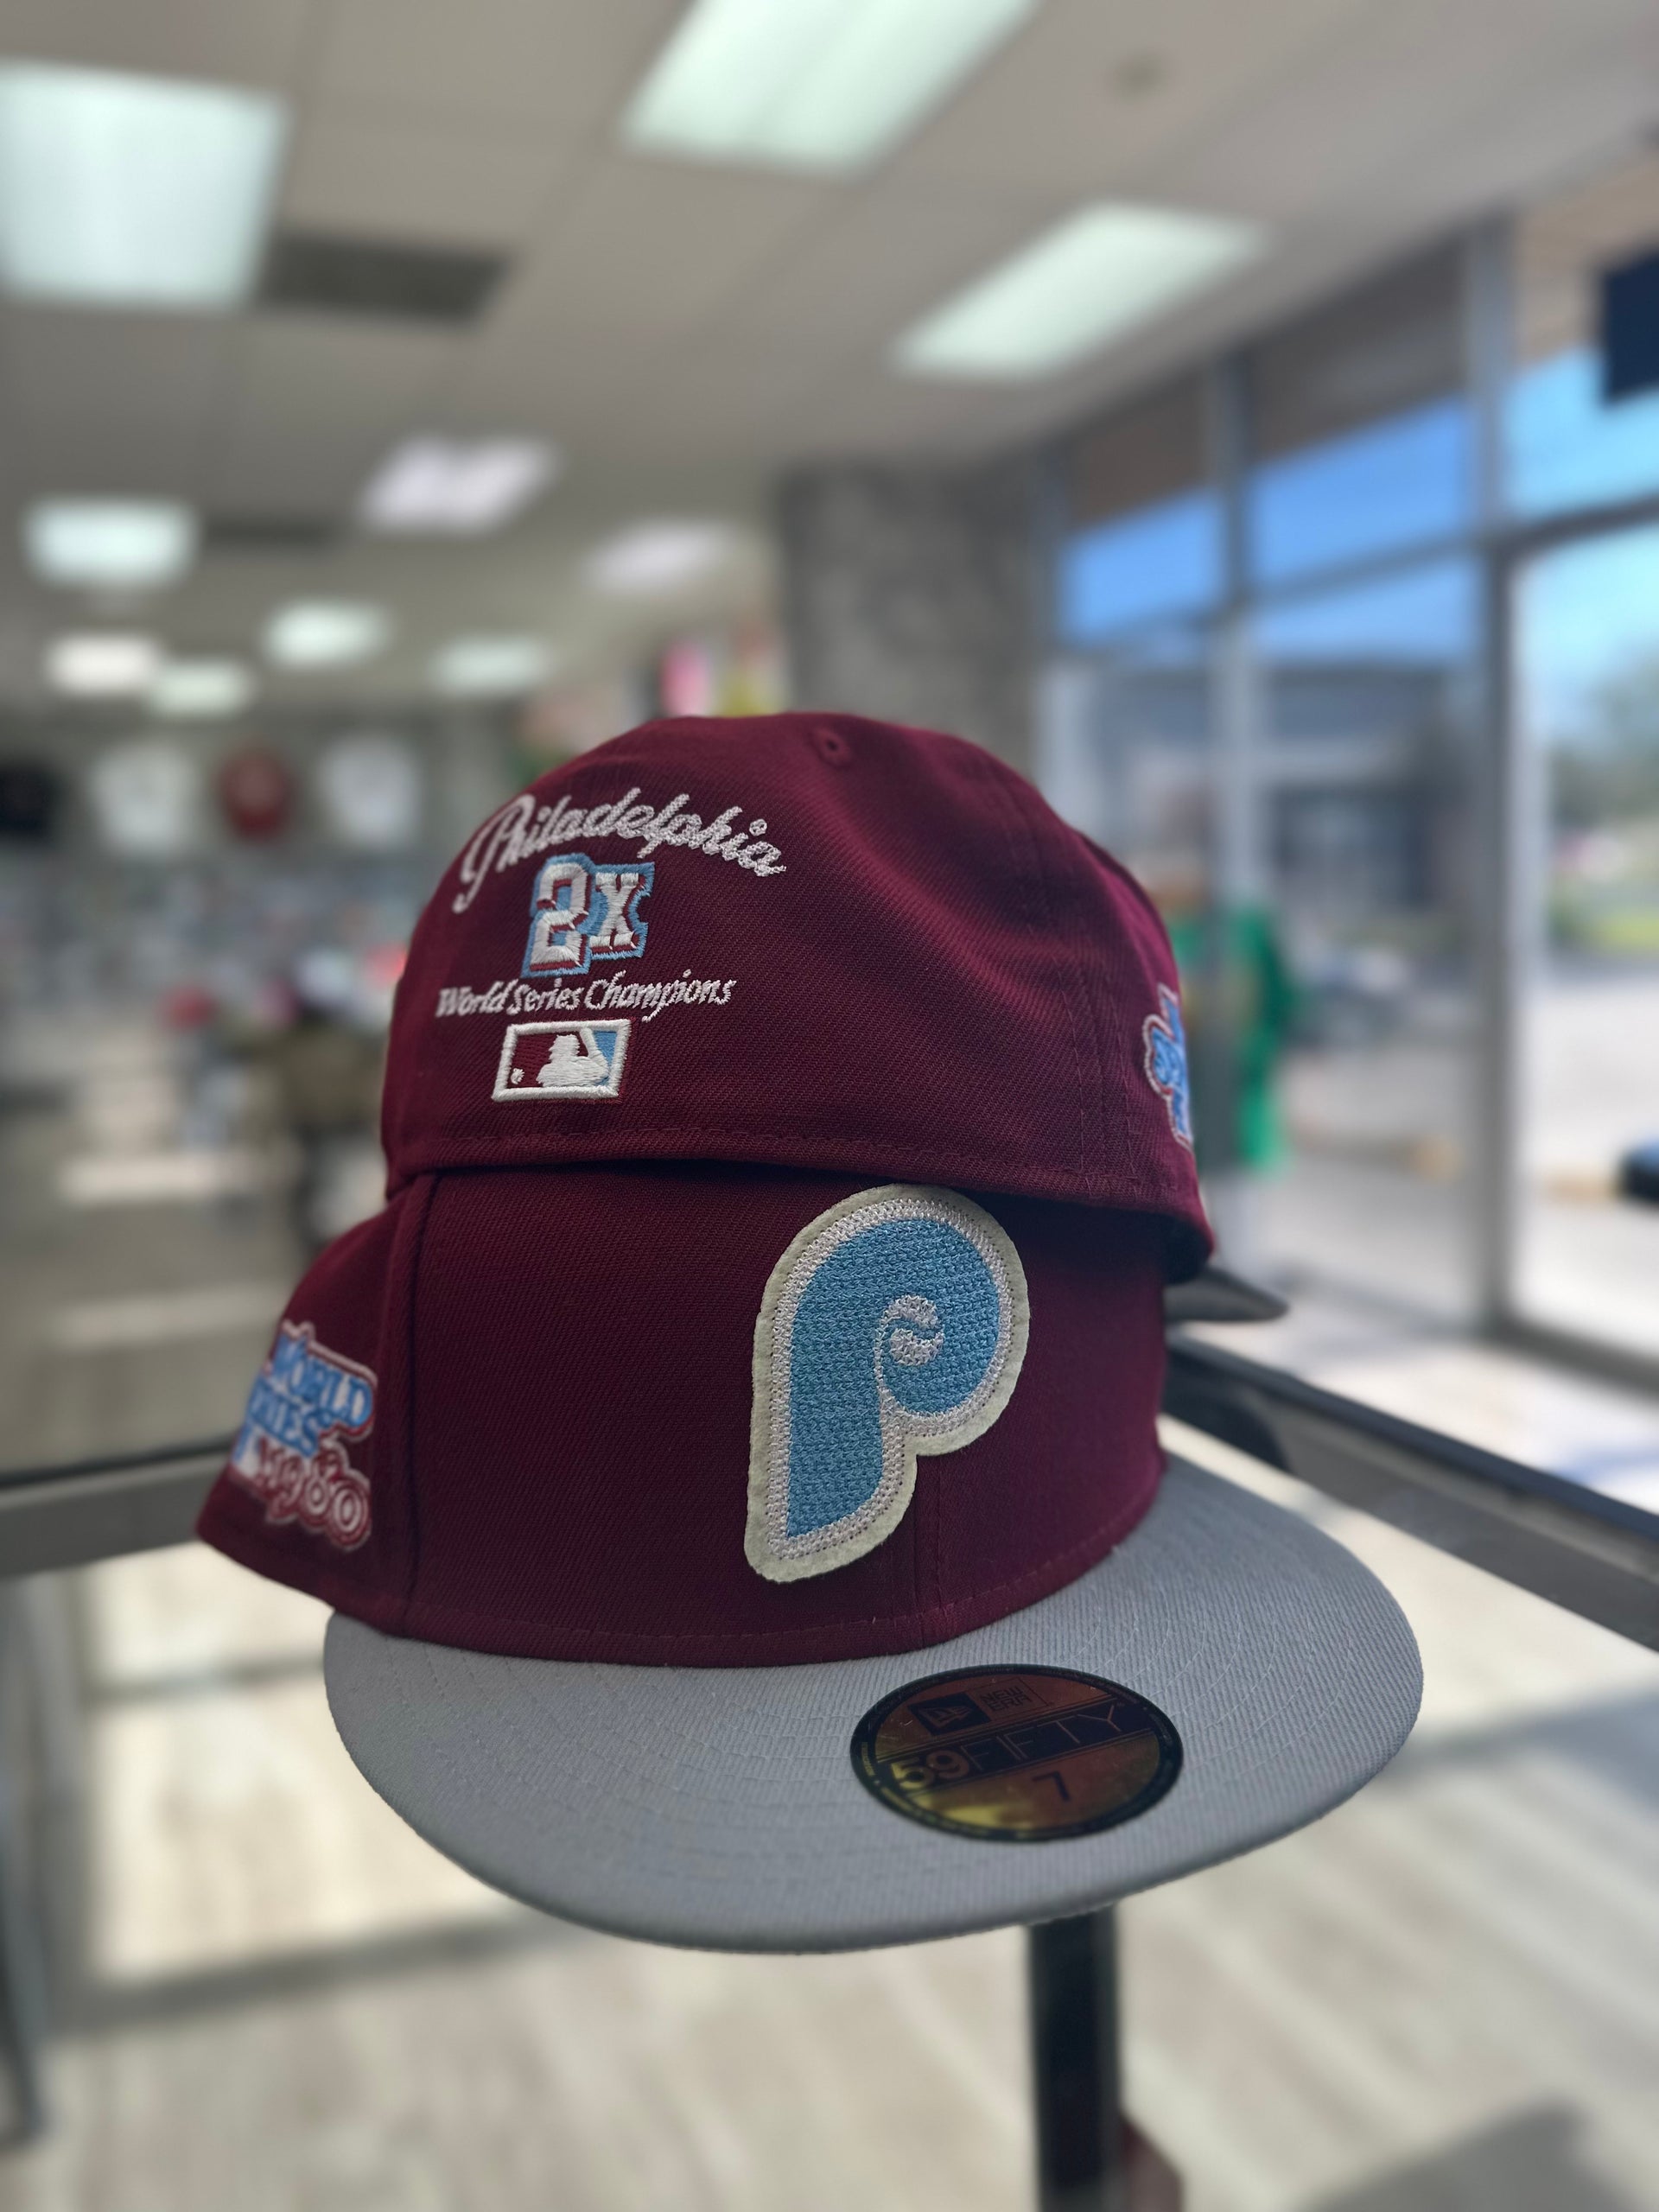 Mens Phillies Hat, Mens Philadelphia Phillies Hats, Baseball Caps